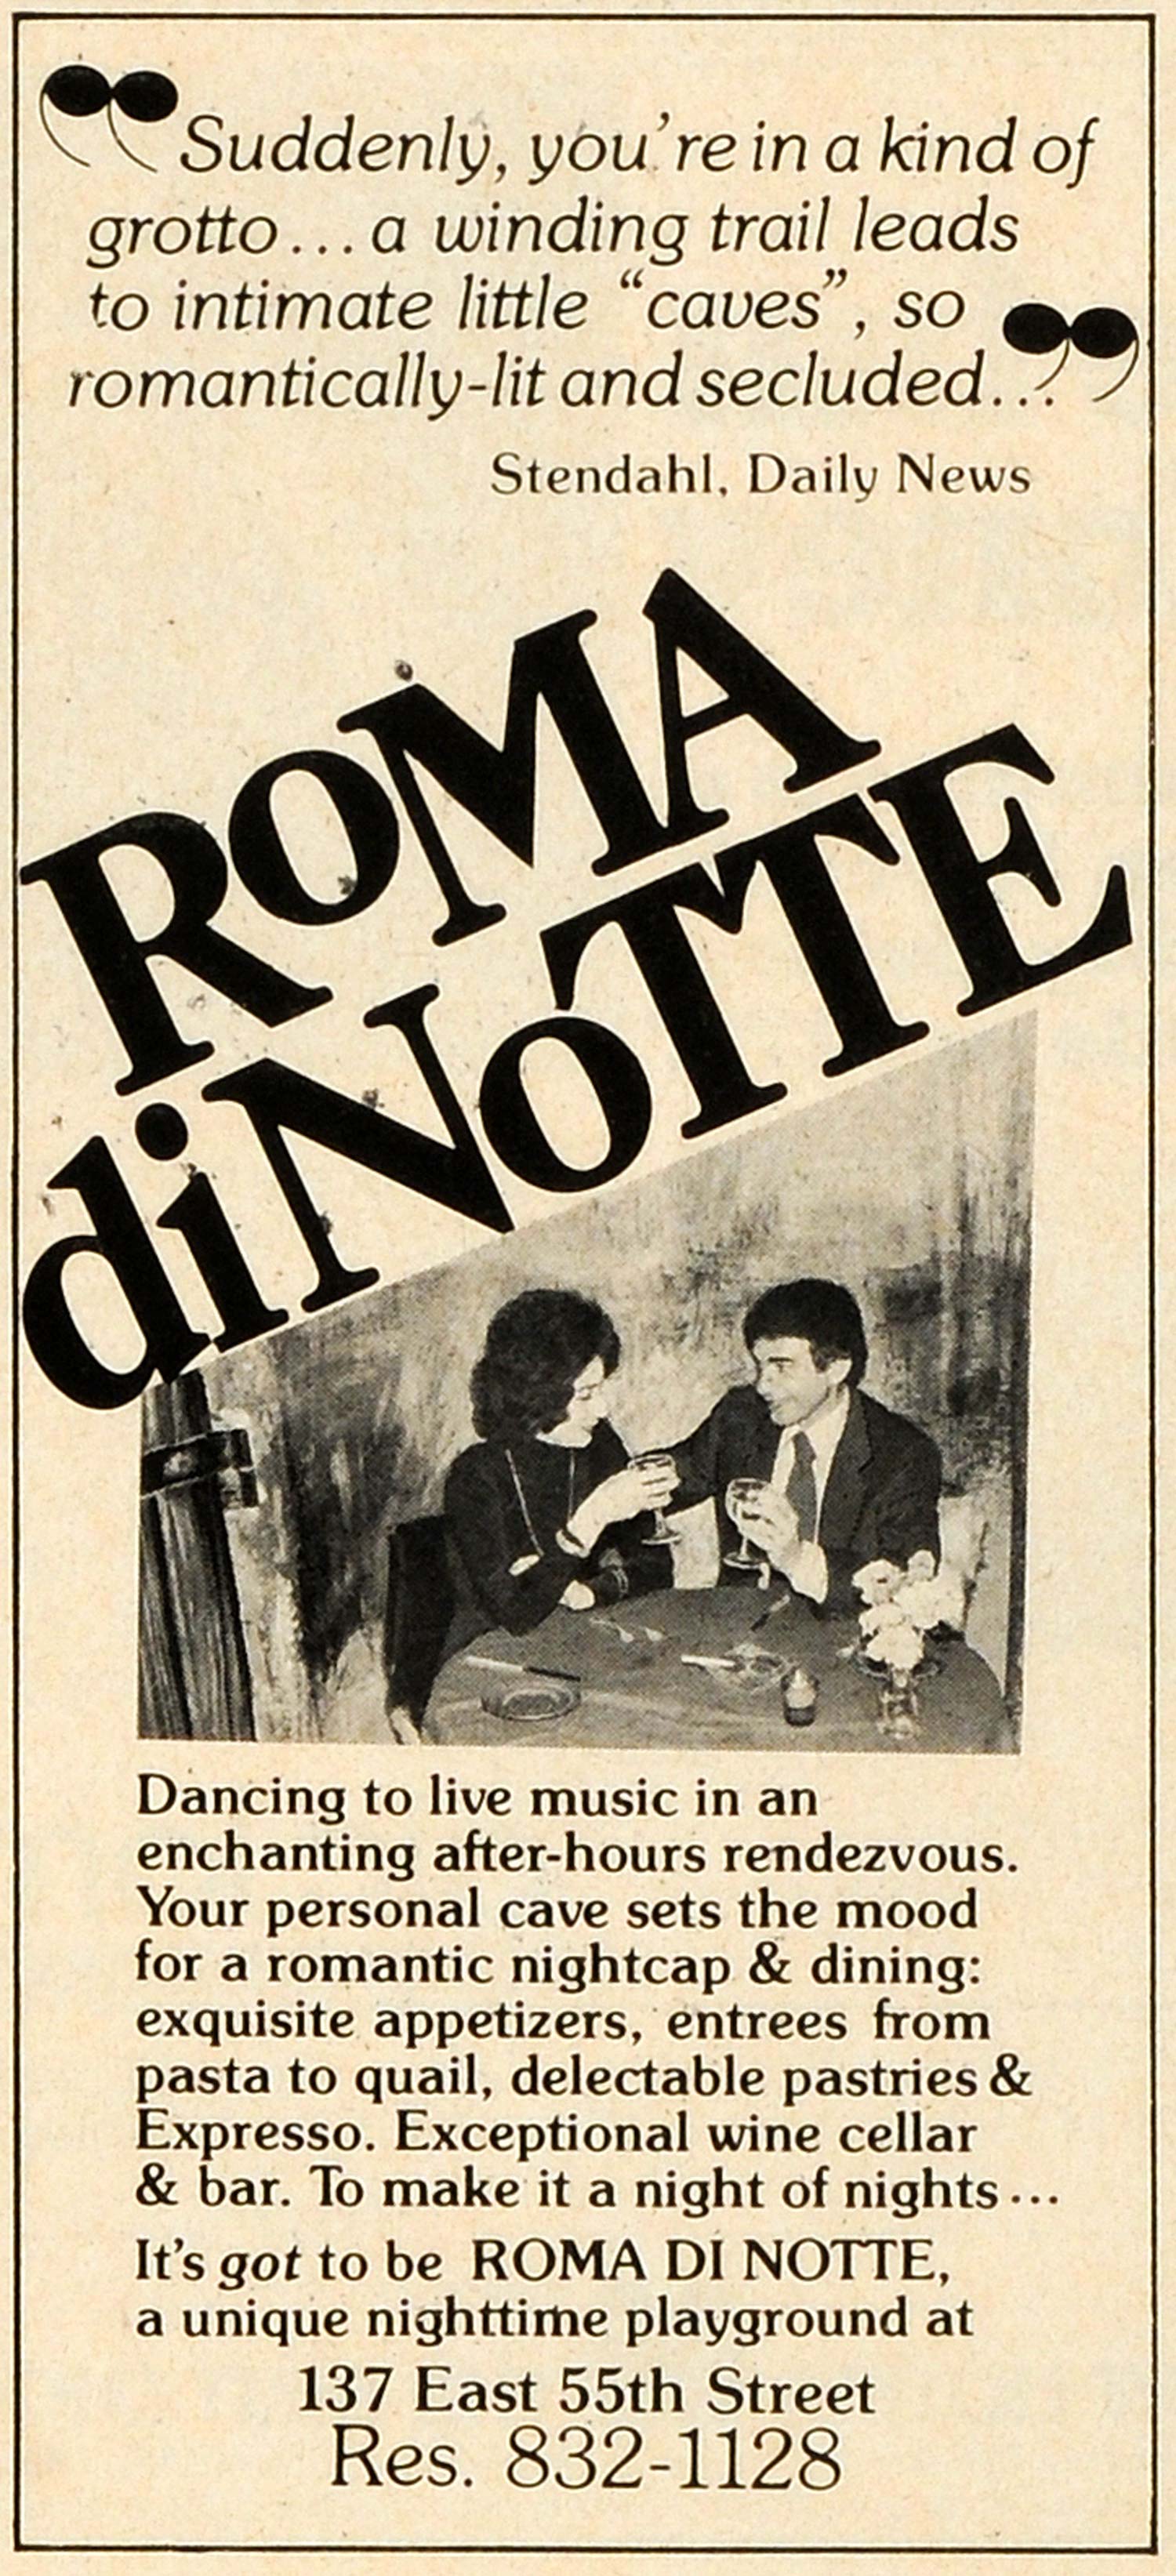 1979 Ad Roma Di Notte Nighttime Playground Club Bar 137 East 55th Street NY NYM1